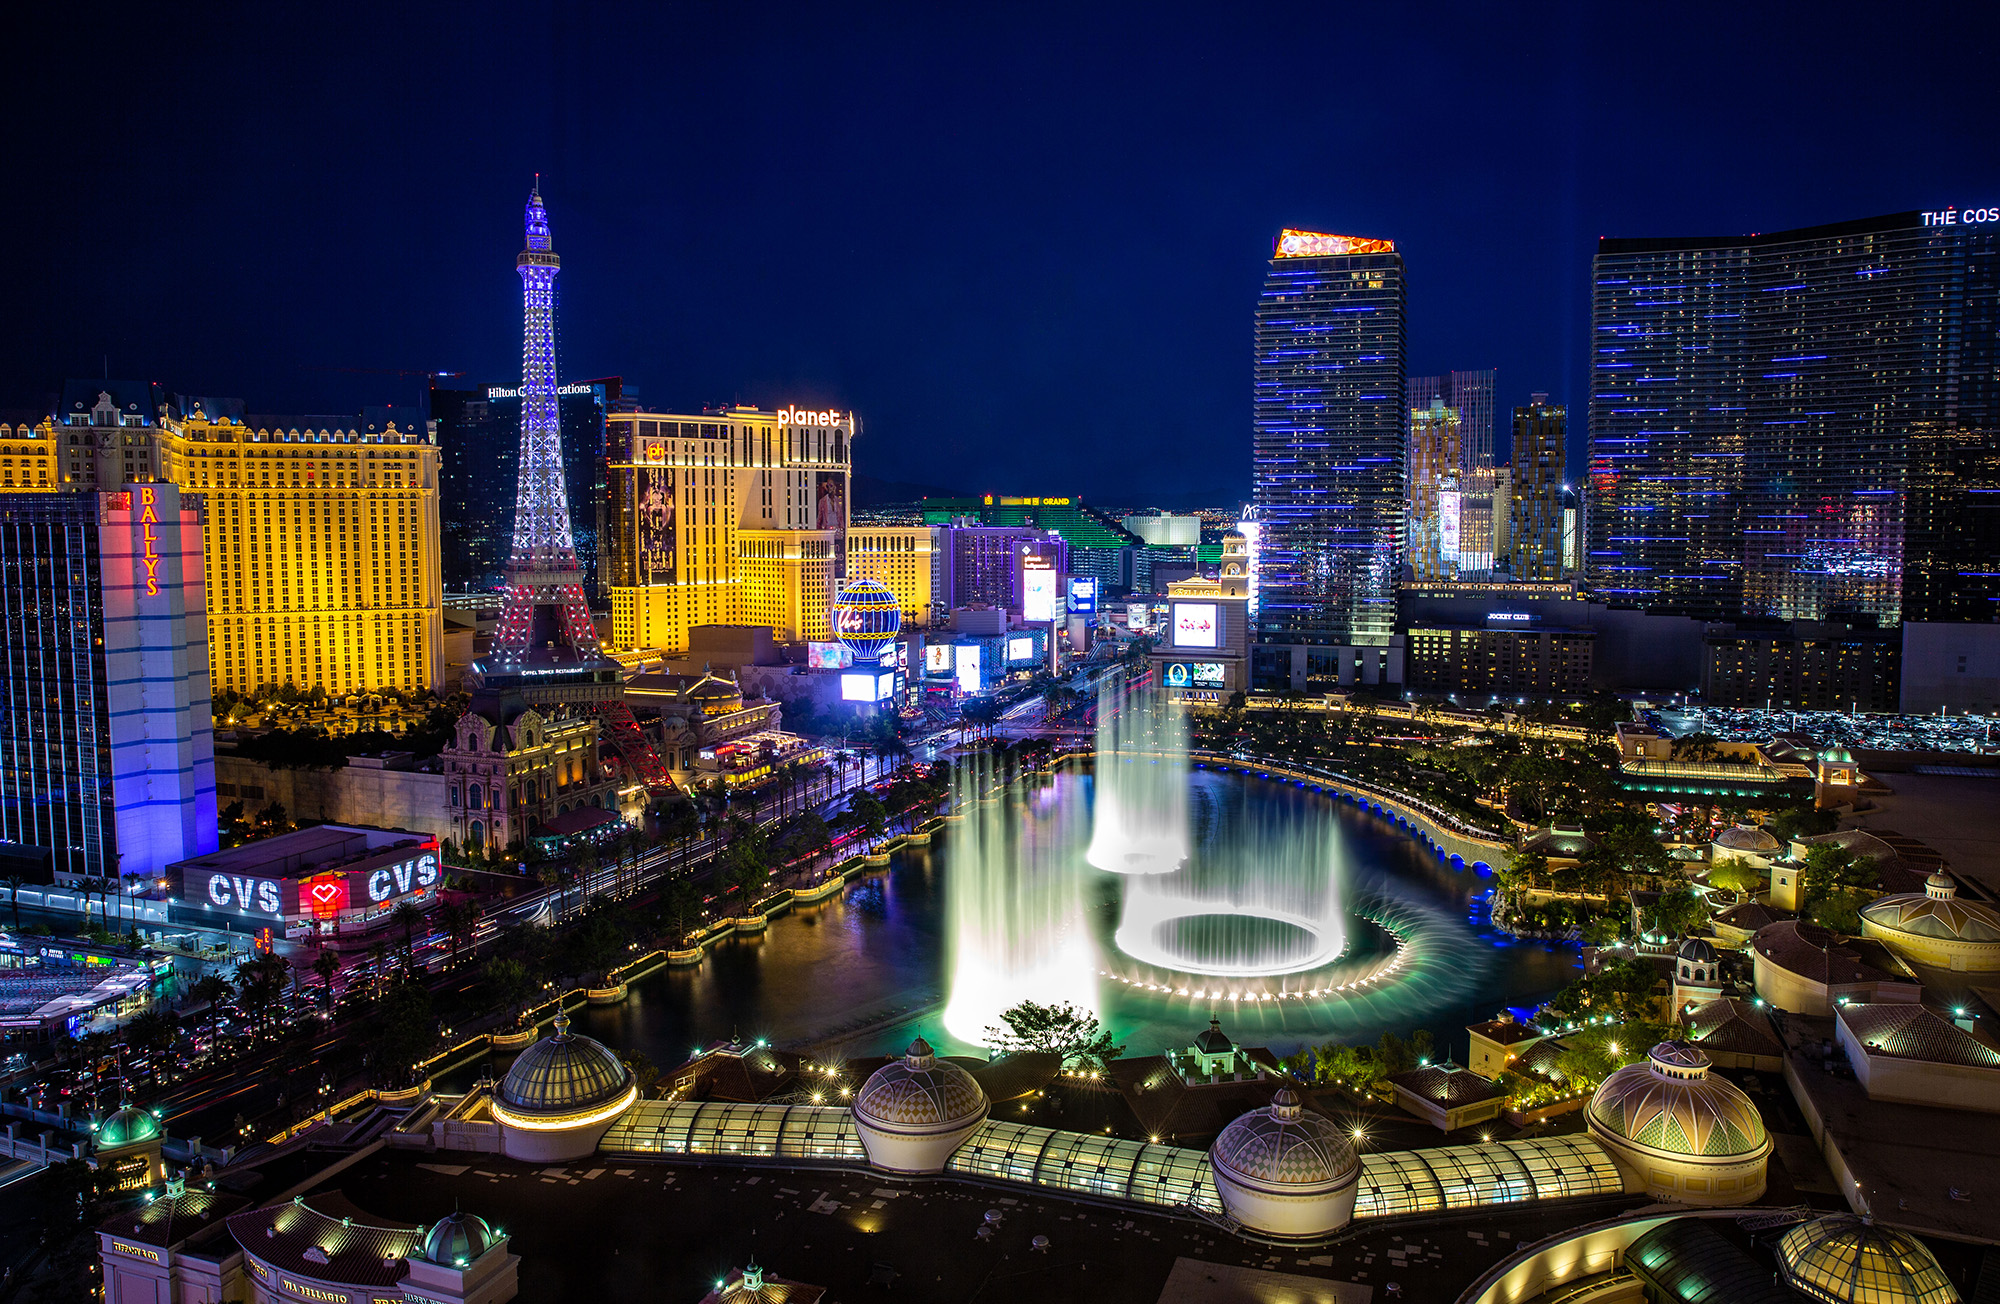 F1 Las Vegas Grand Prix Bellagio Fountain Club tickets on sale